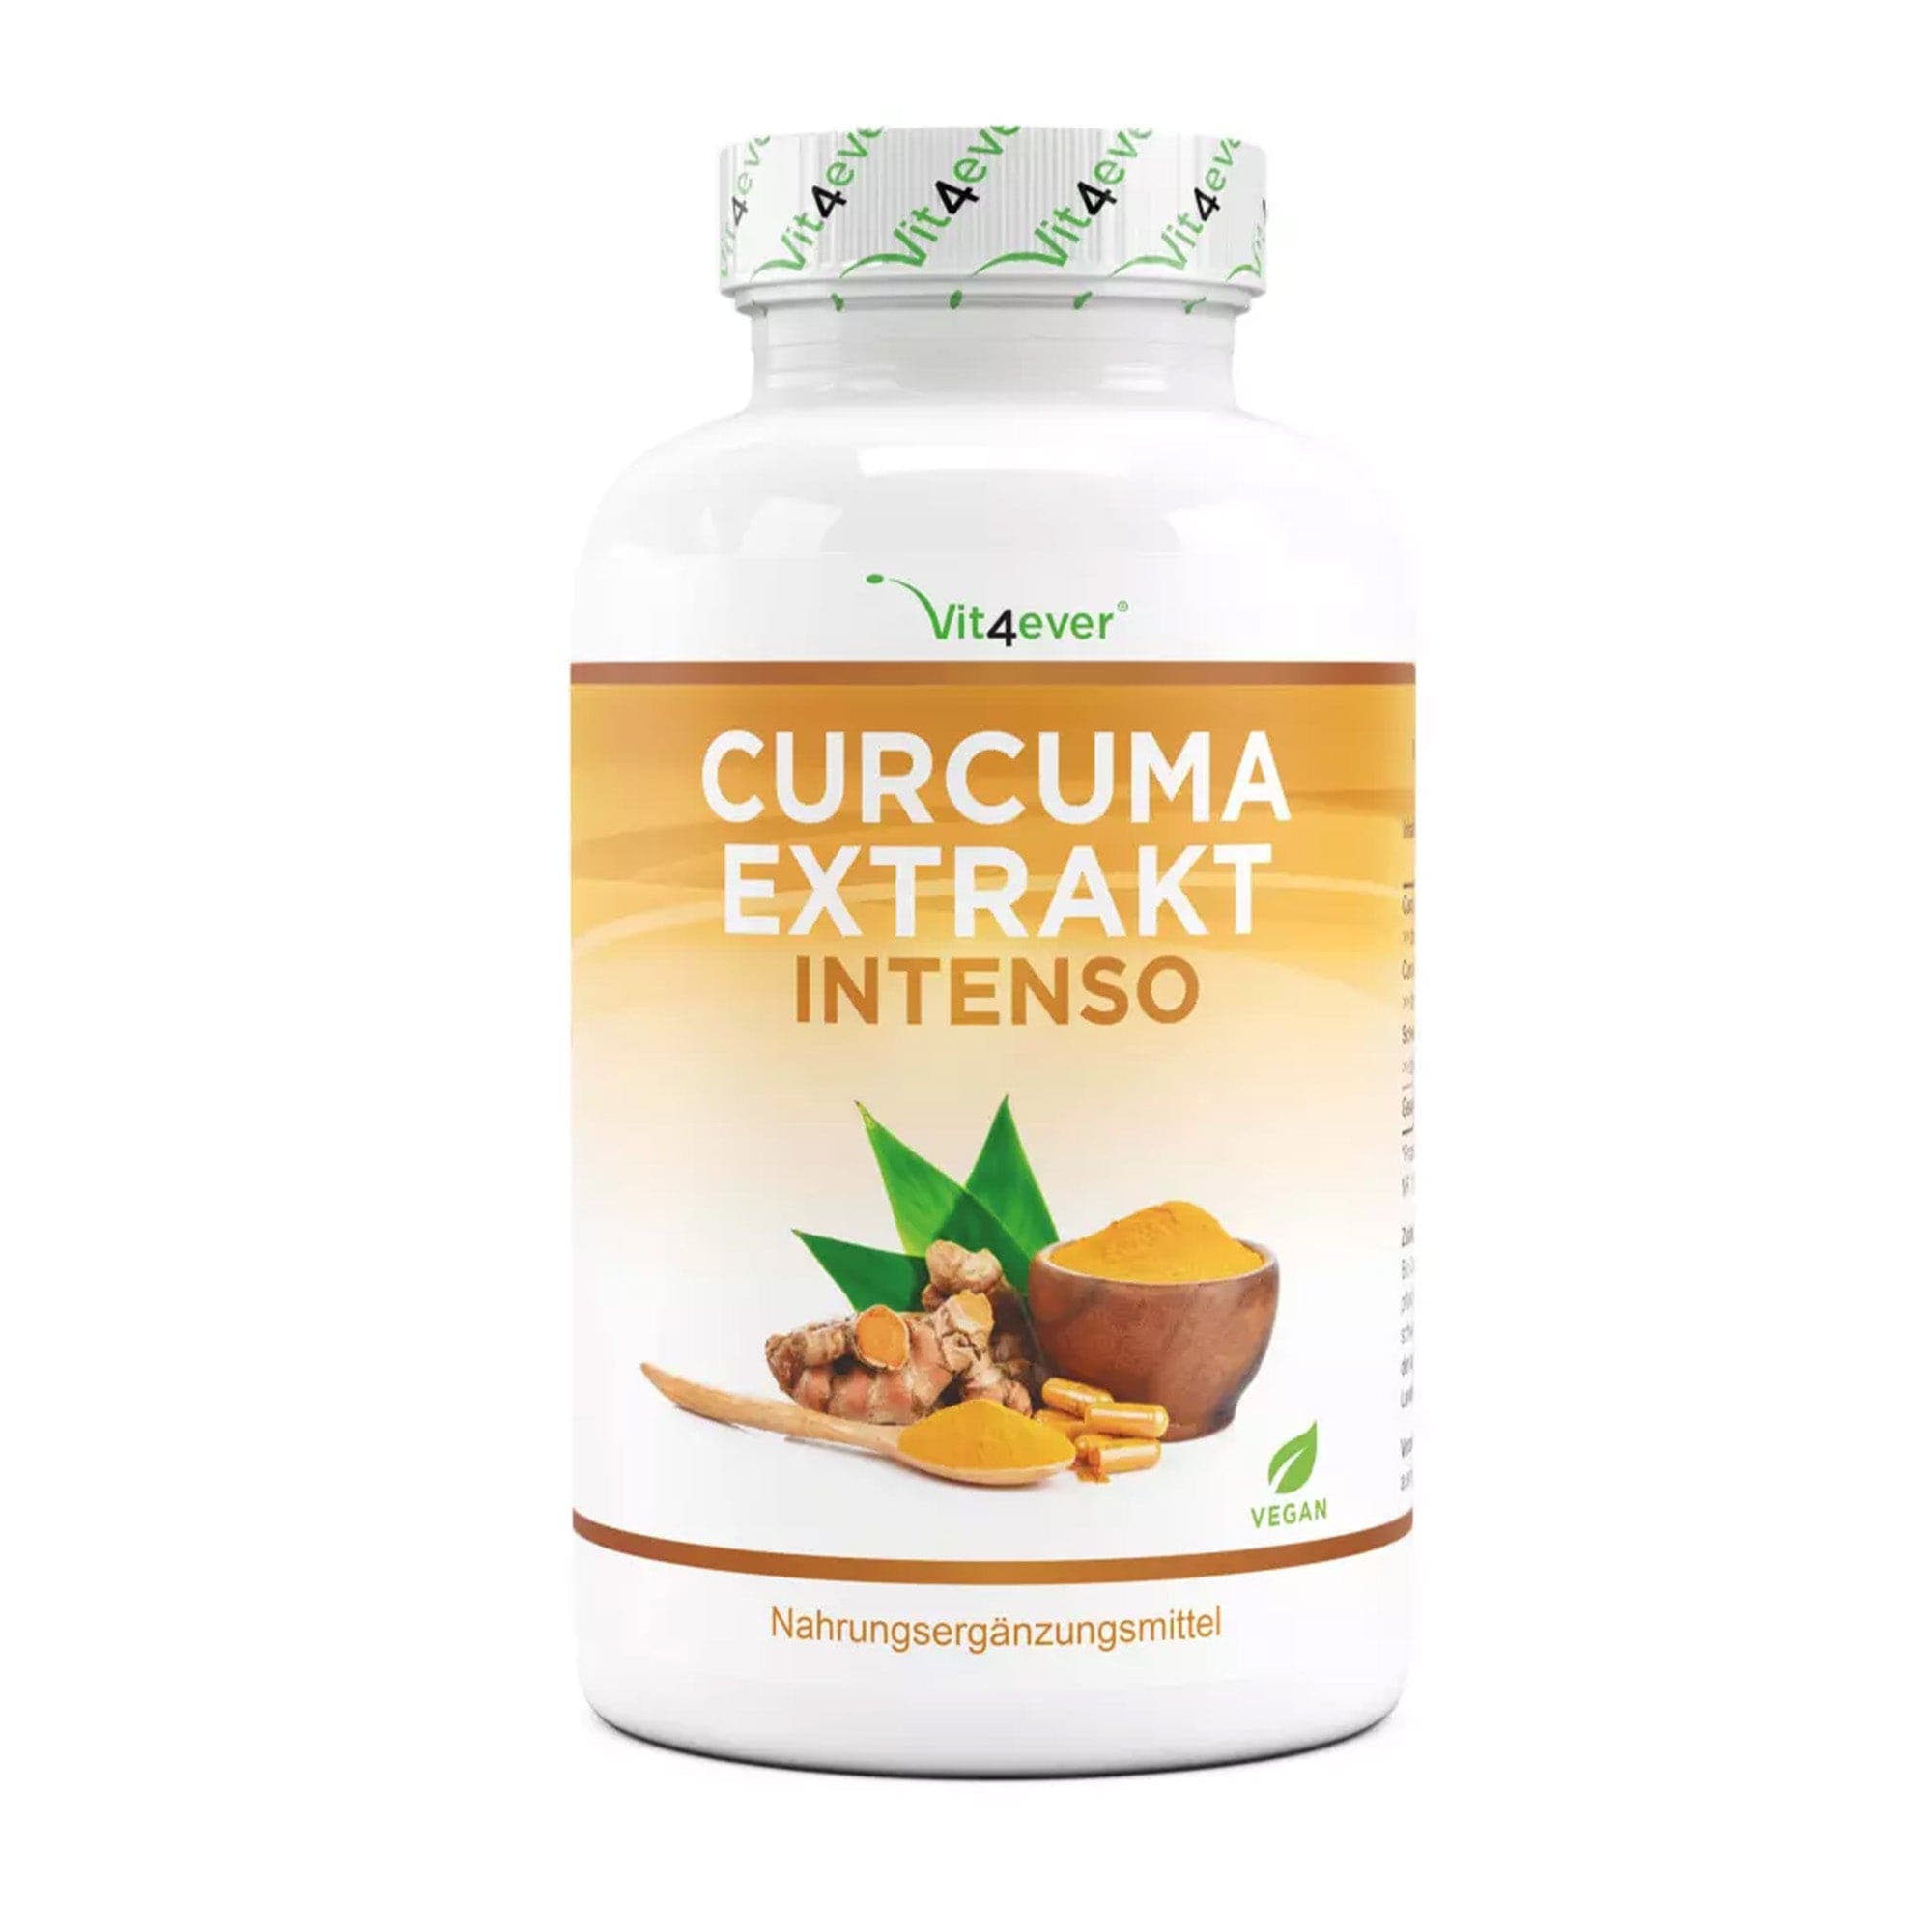 curcuma extract vit4ever